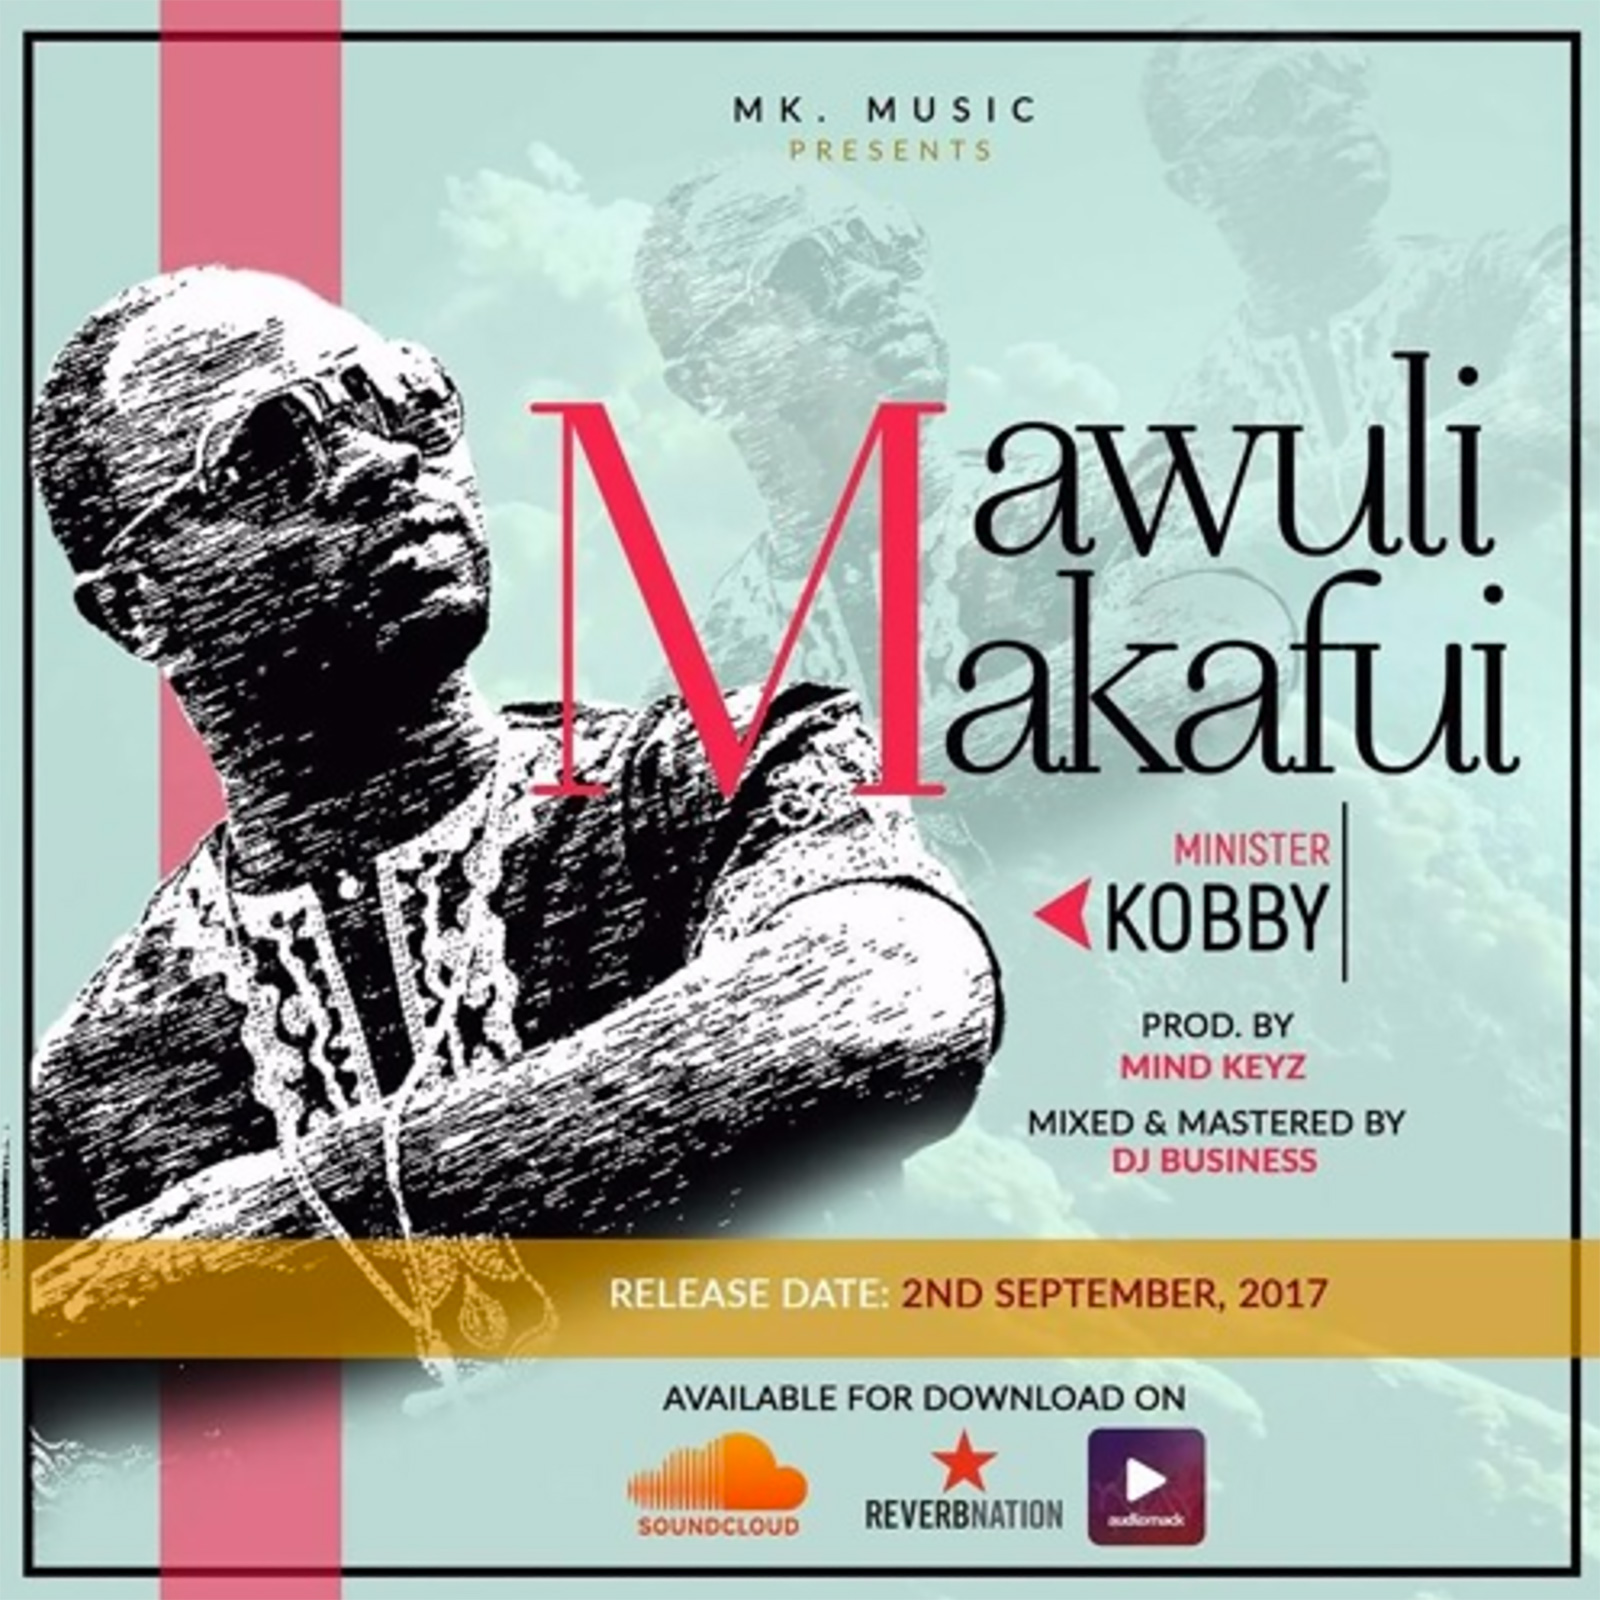 Mawuli Makafui by Minister Kobby